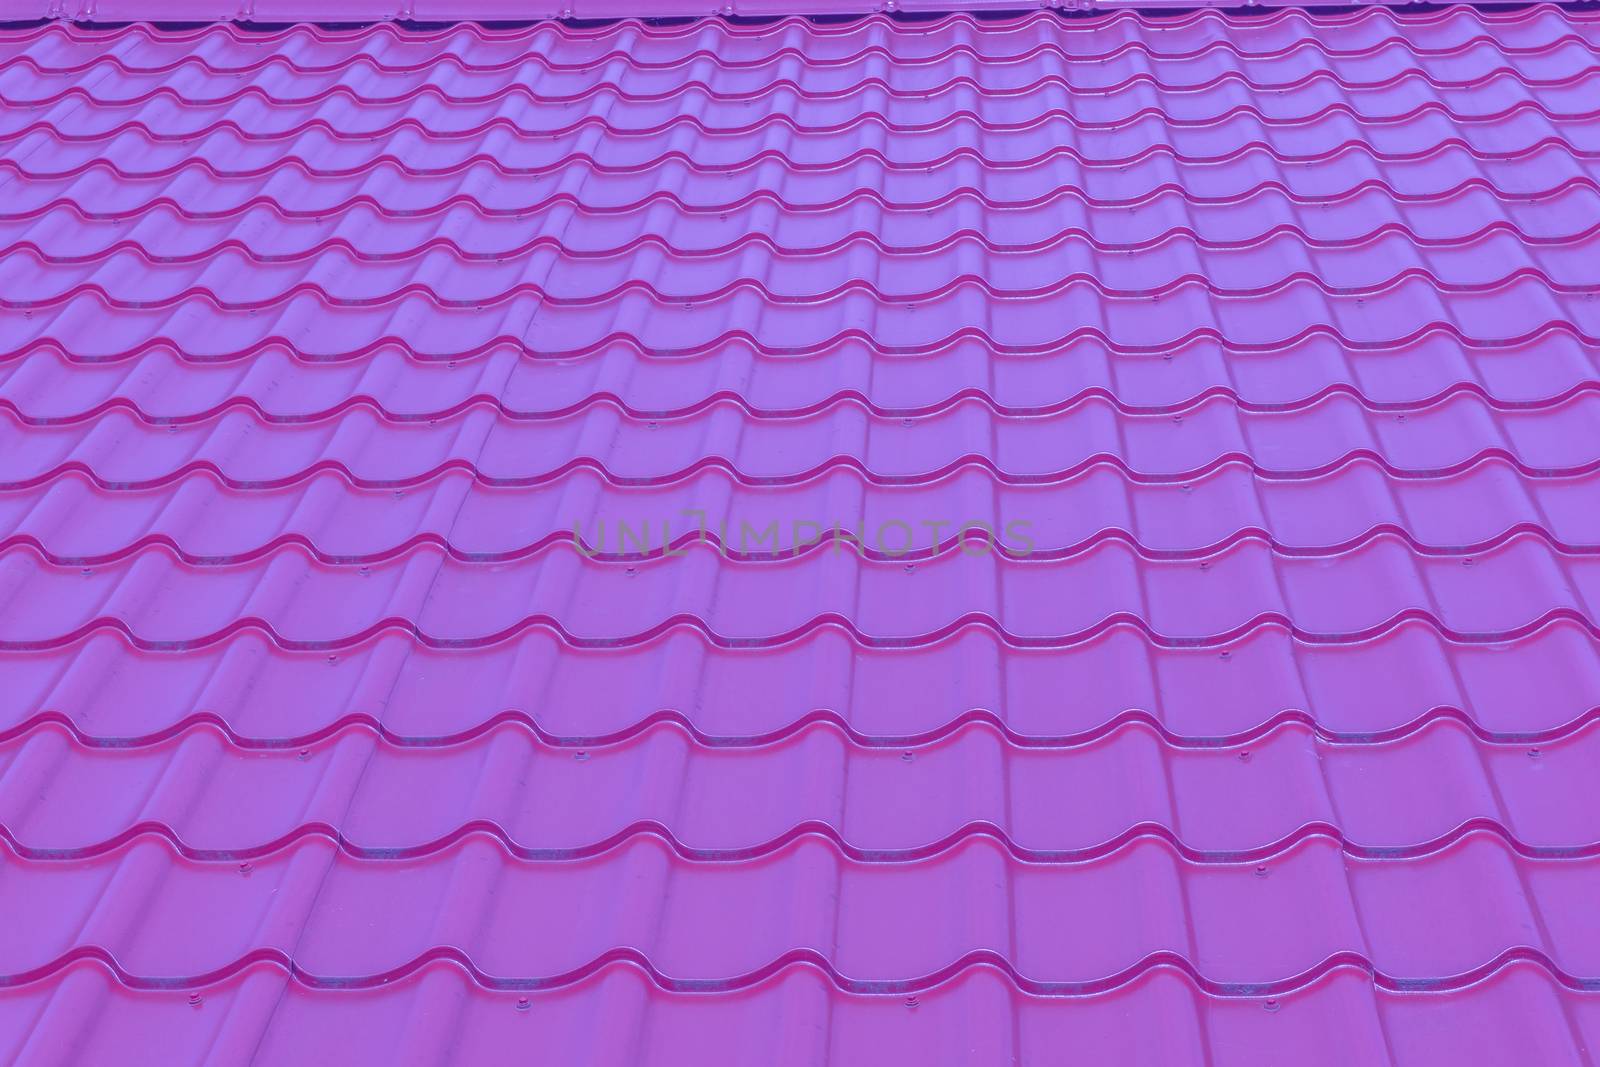 modern bright pastel purple glossy rooftop tiling texture background by charlottebleijenberg